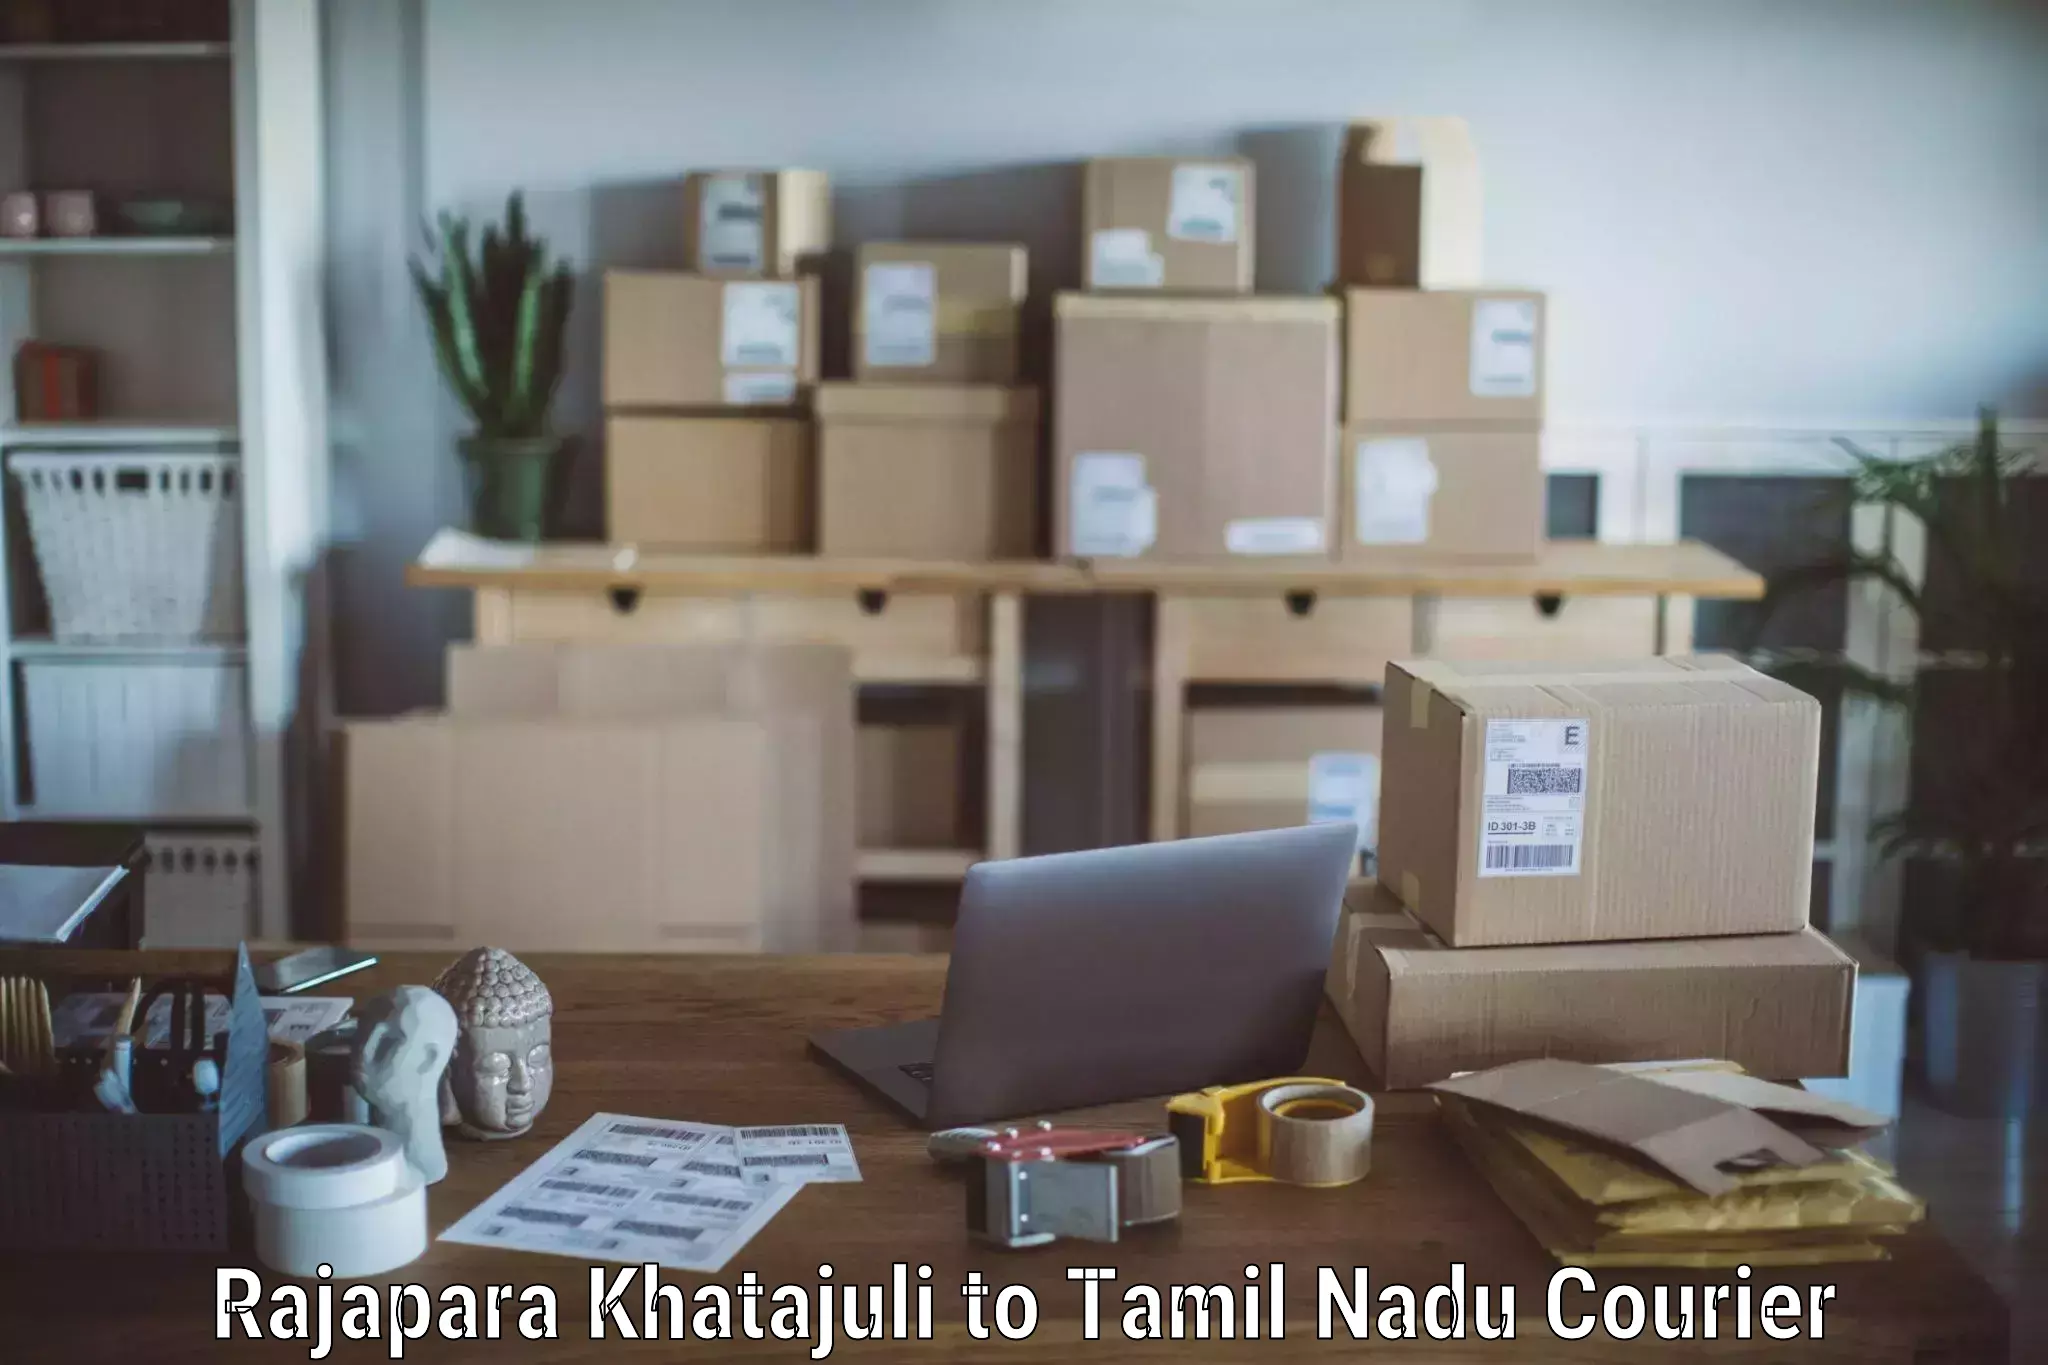 Trusted moving company Rajapara Khatajuli to Palladam